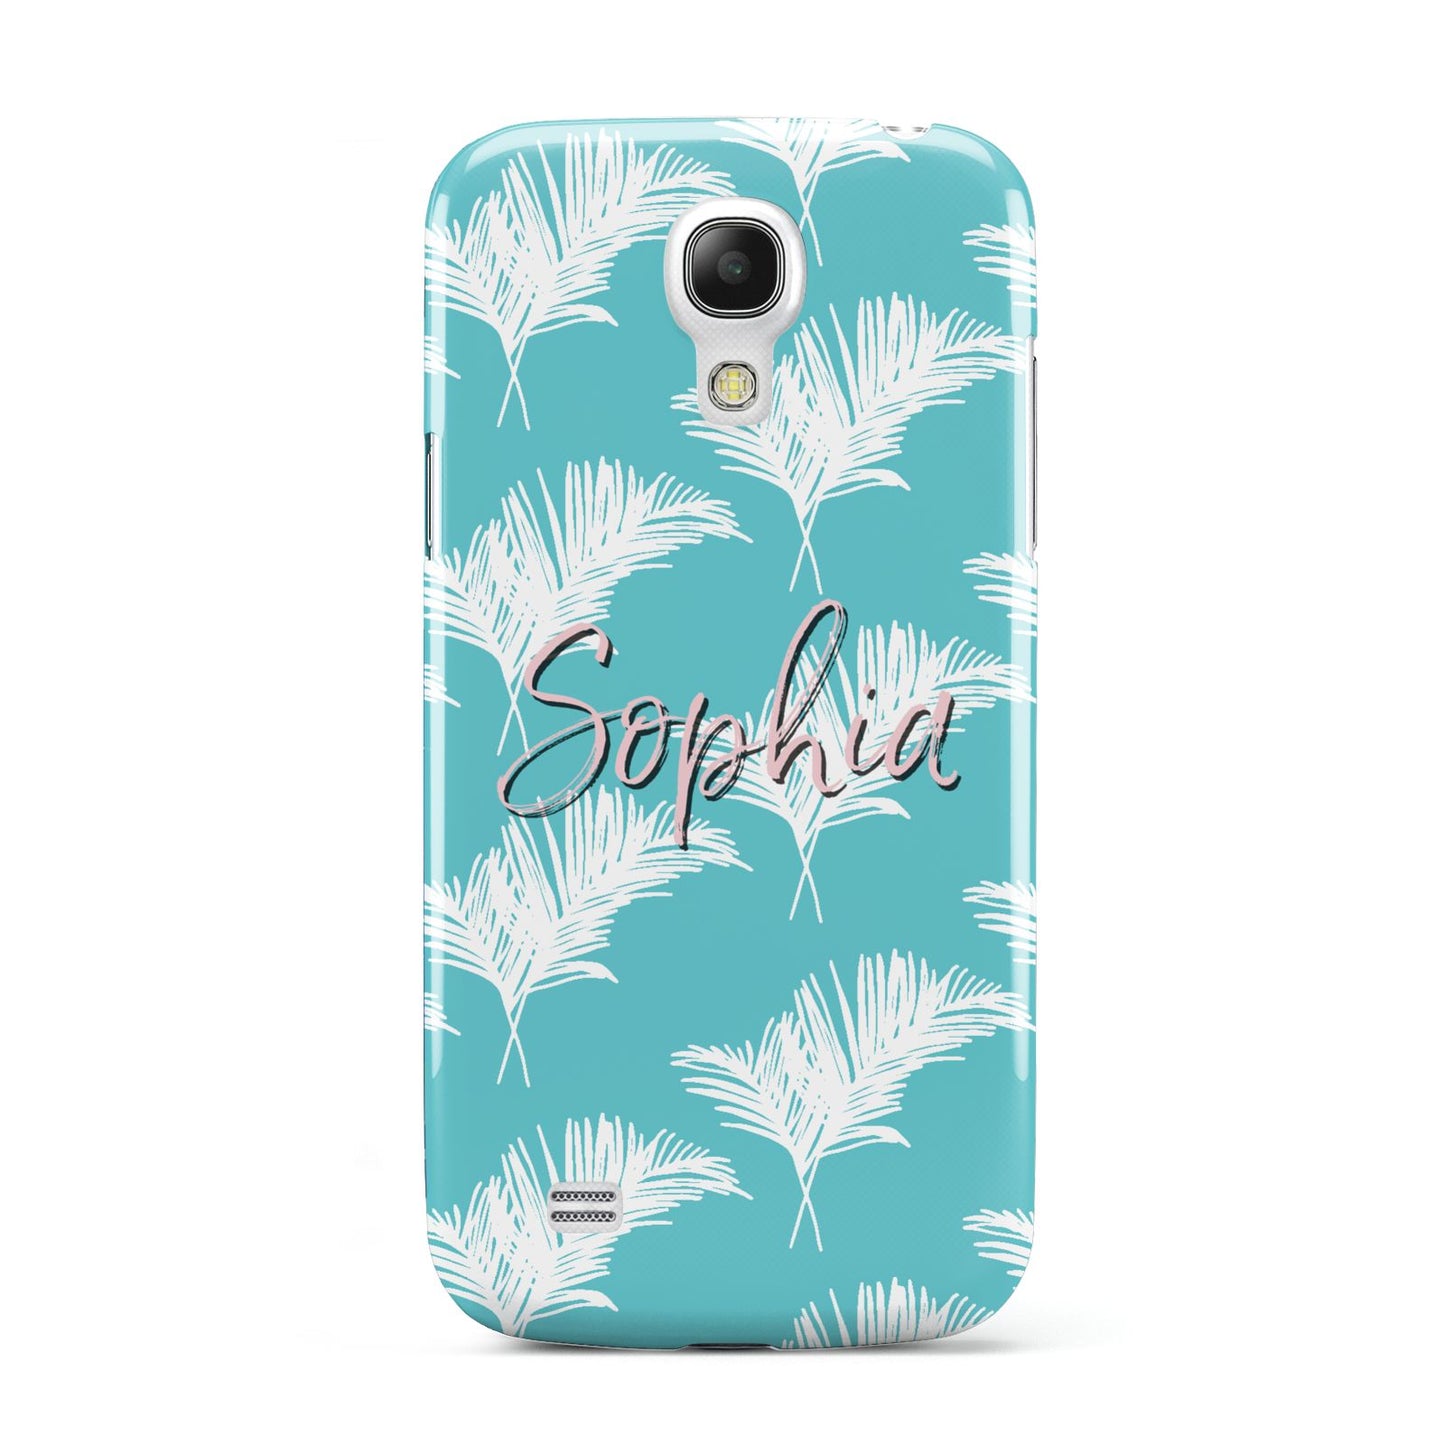 Personalised Blue White Tropical Foliage Samsung Galaxy S4 Mini Case